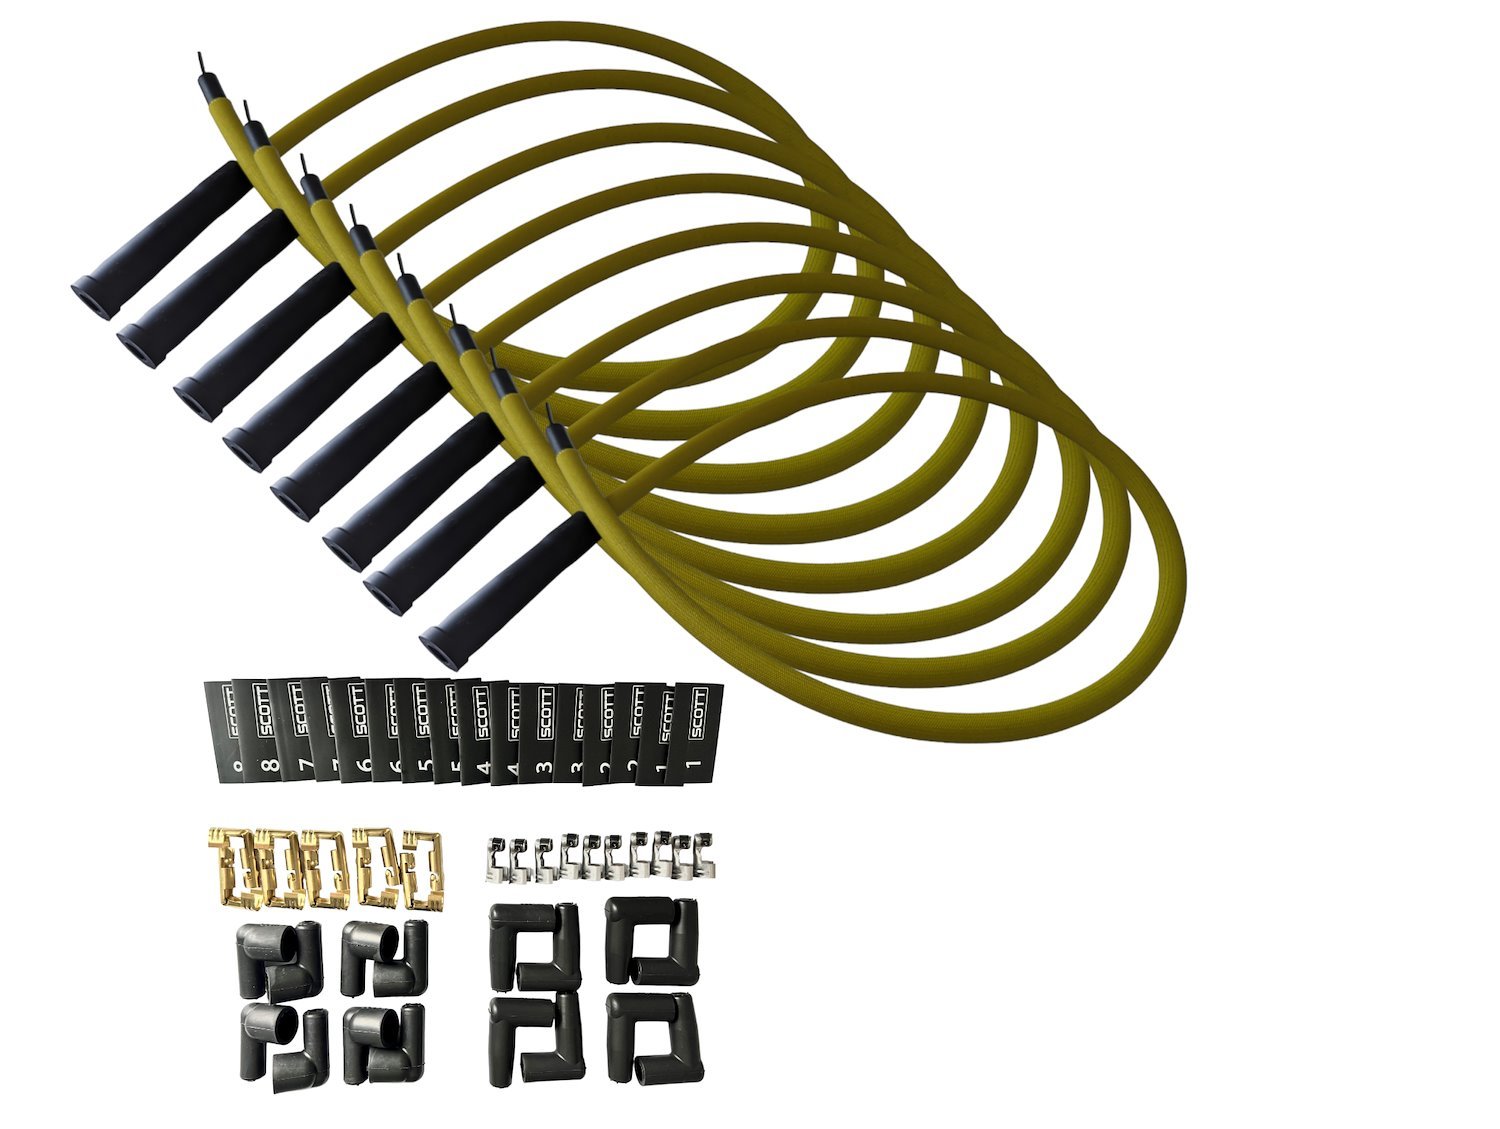 SPW-PS-KSTR-5 DIY High-Performance Fiberglass-Oversleeved Spark Plug Wire Set for DIY Kits, Straight Boot [Yellow]